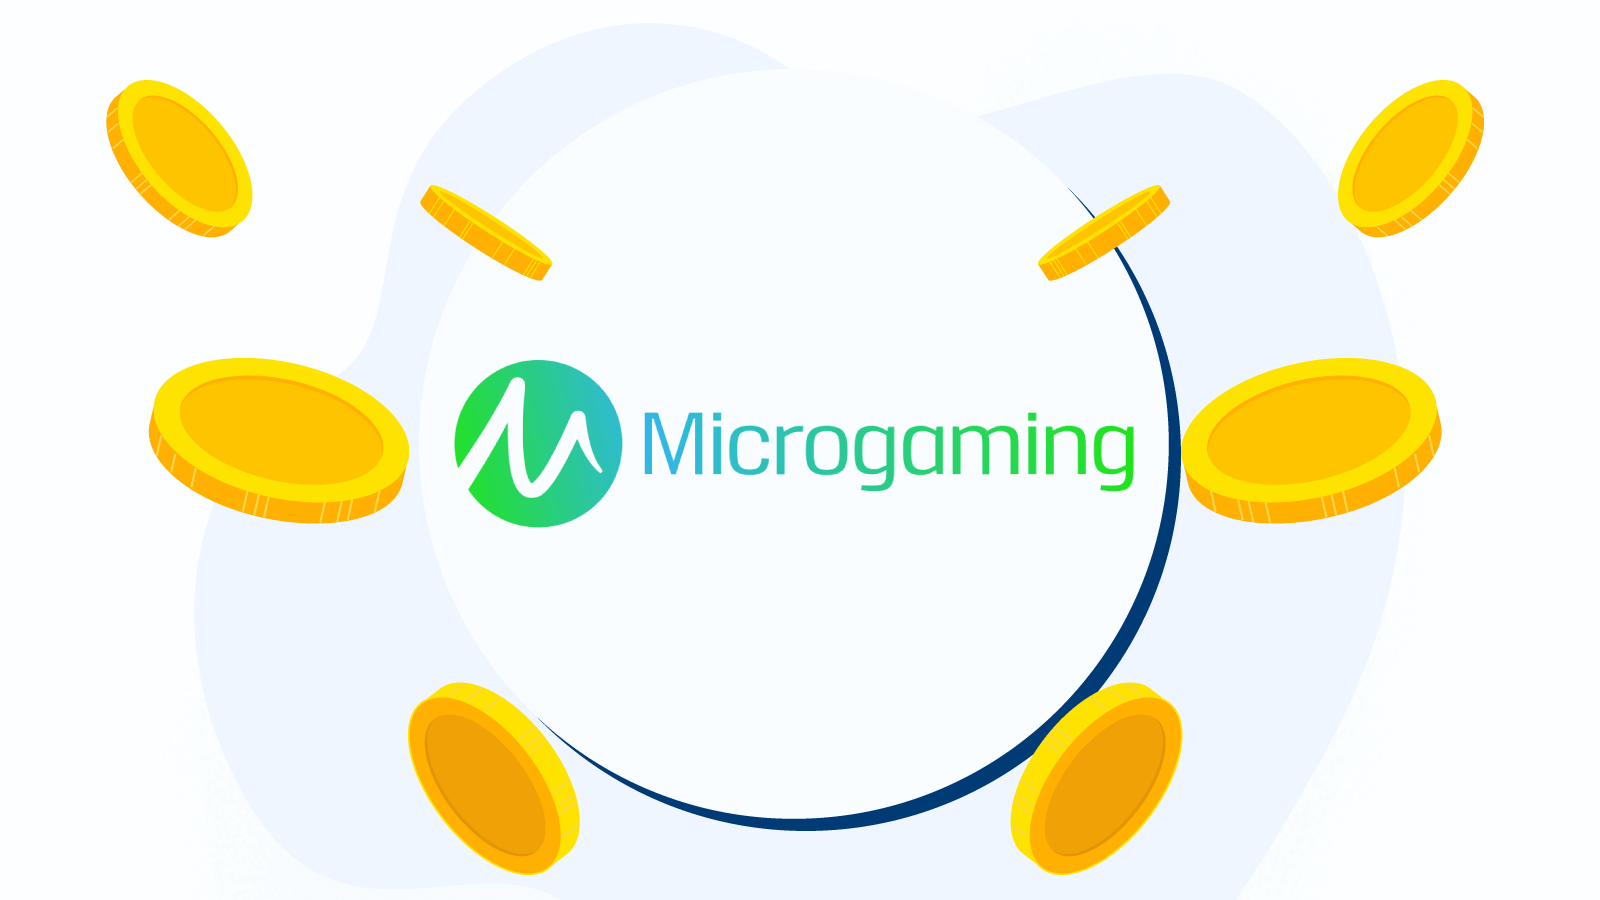 Microgaming $1 deposit jackpot chances